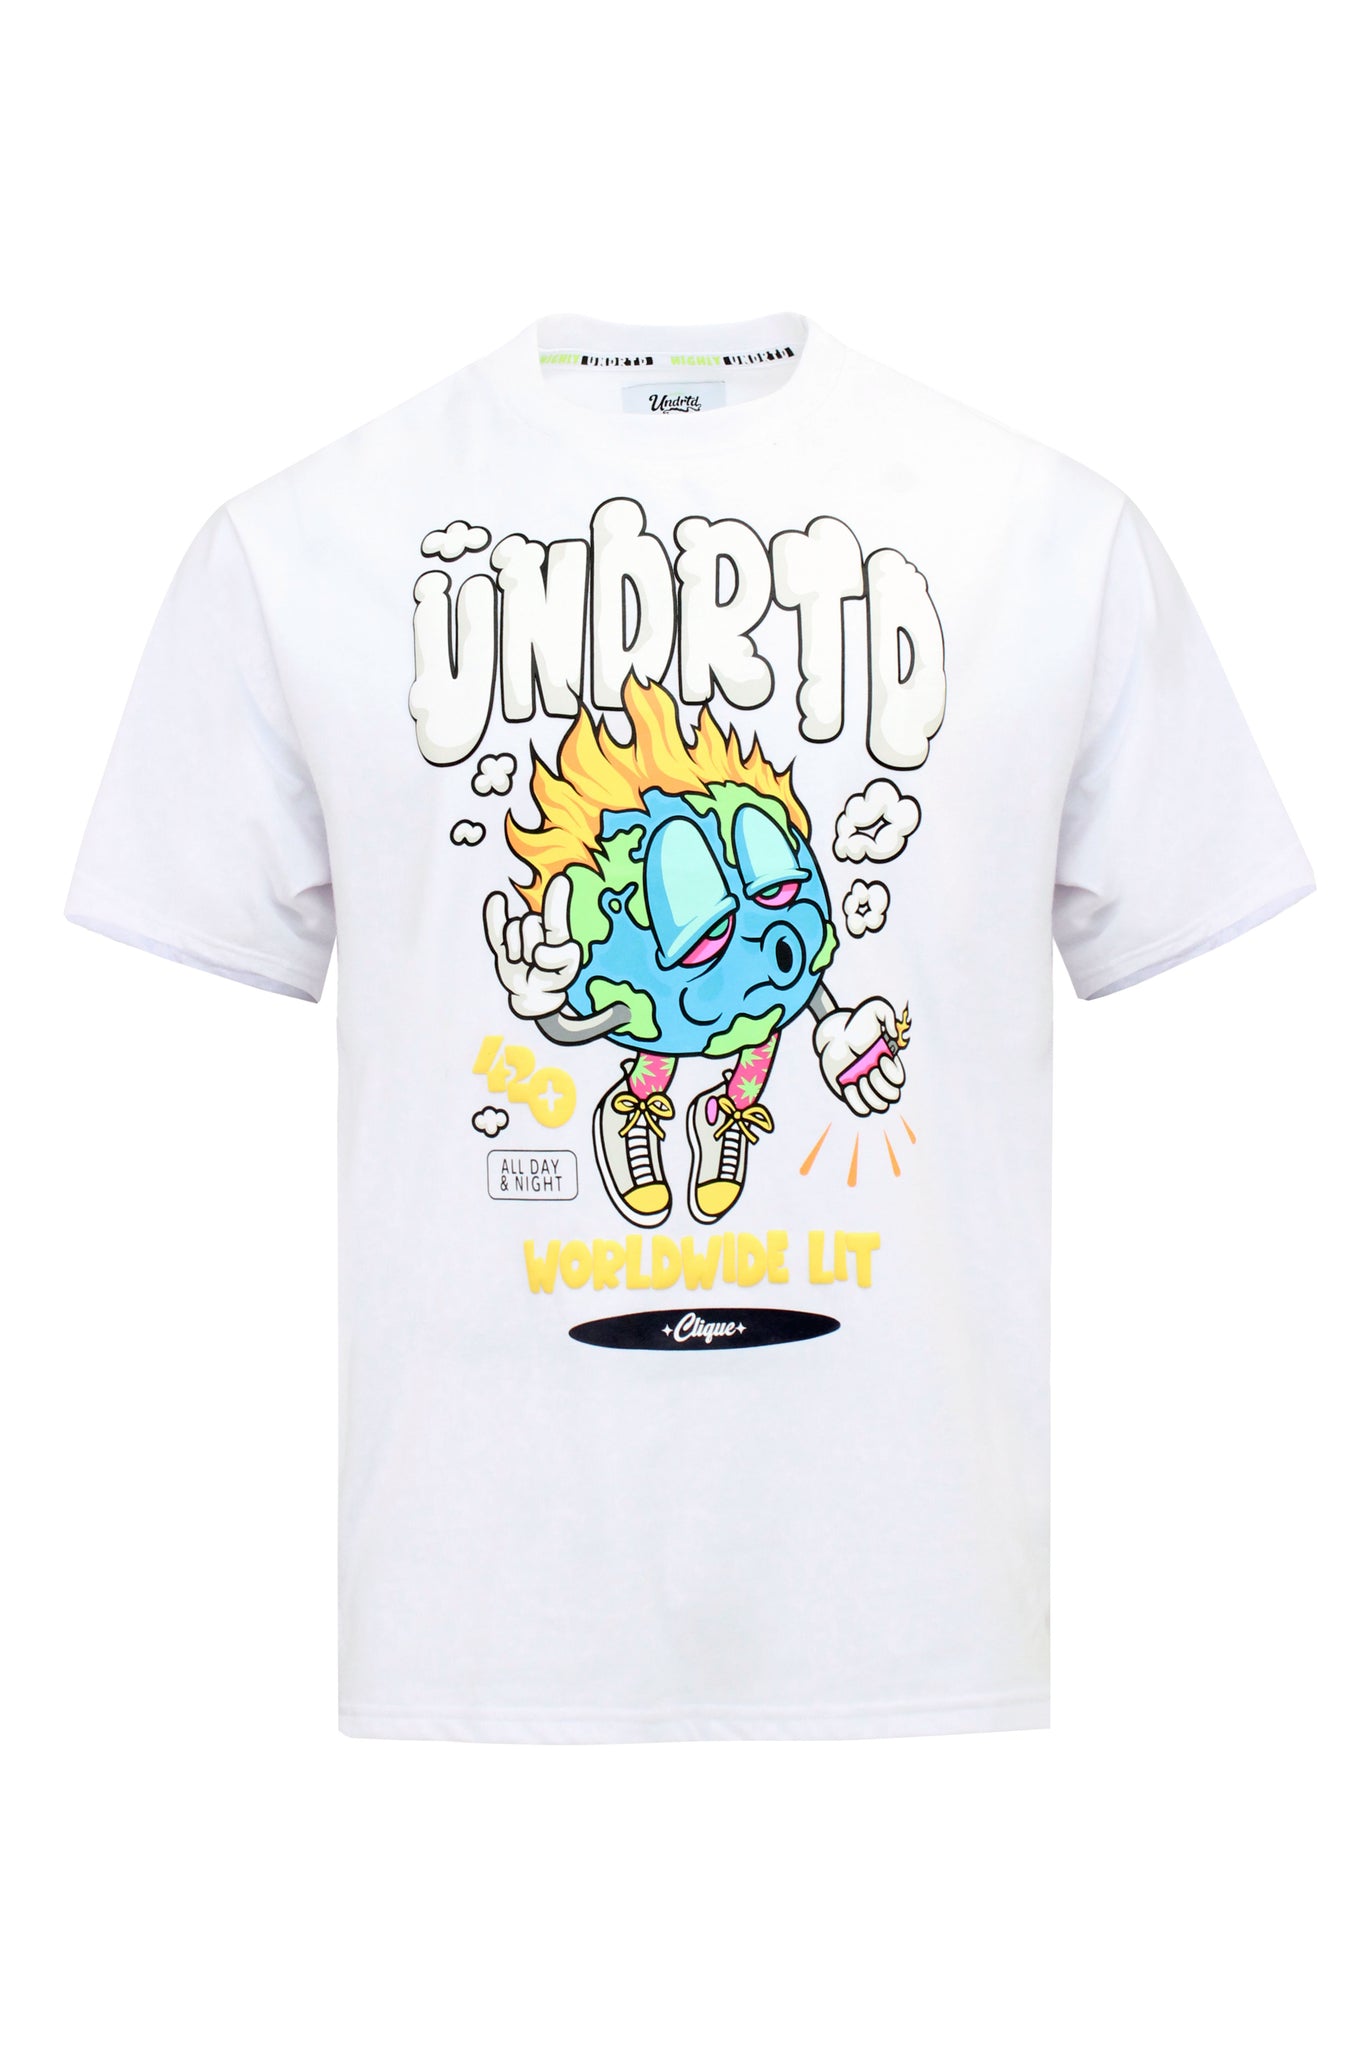 Lite The World T-shirts